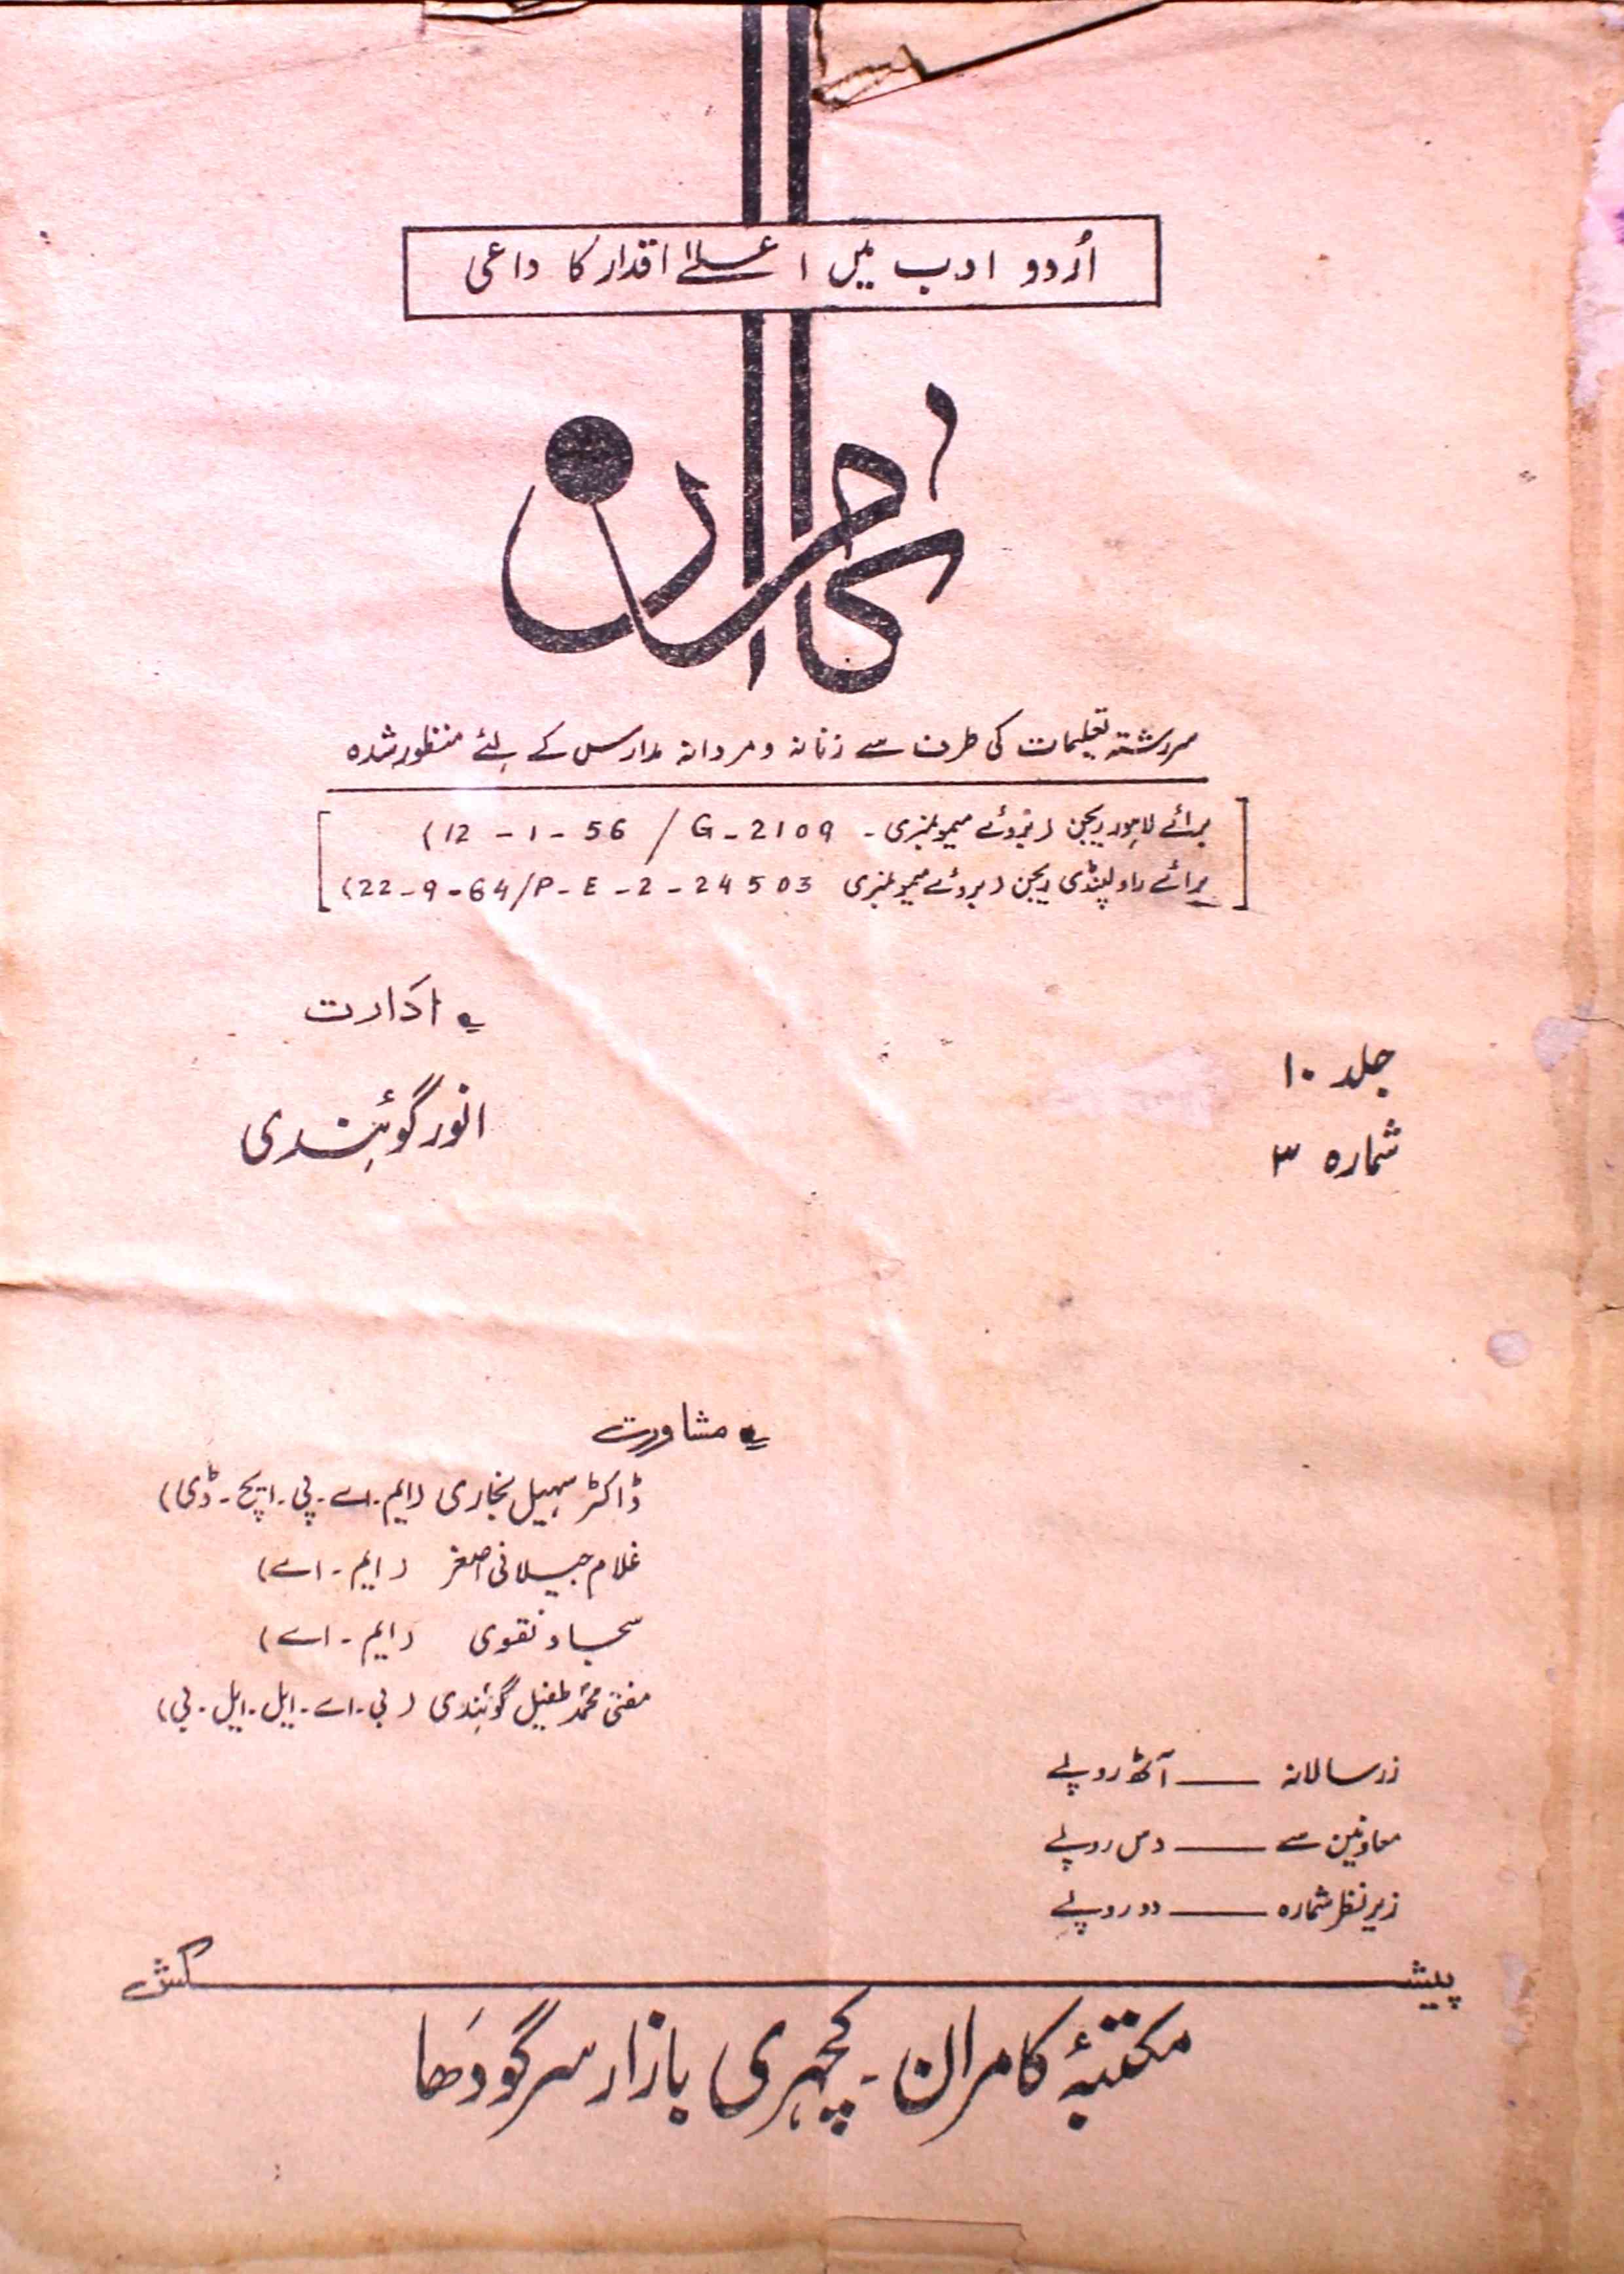 Kaamran Jild 10 No 3  March 1964-SVK-Shumara Number-003